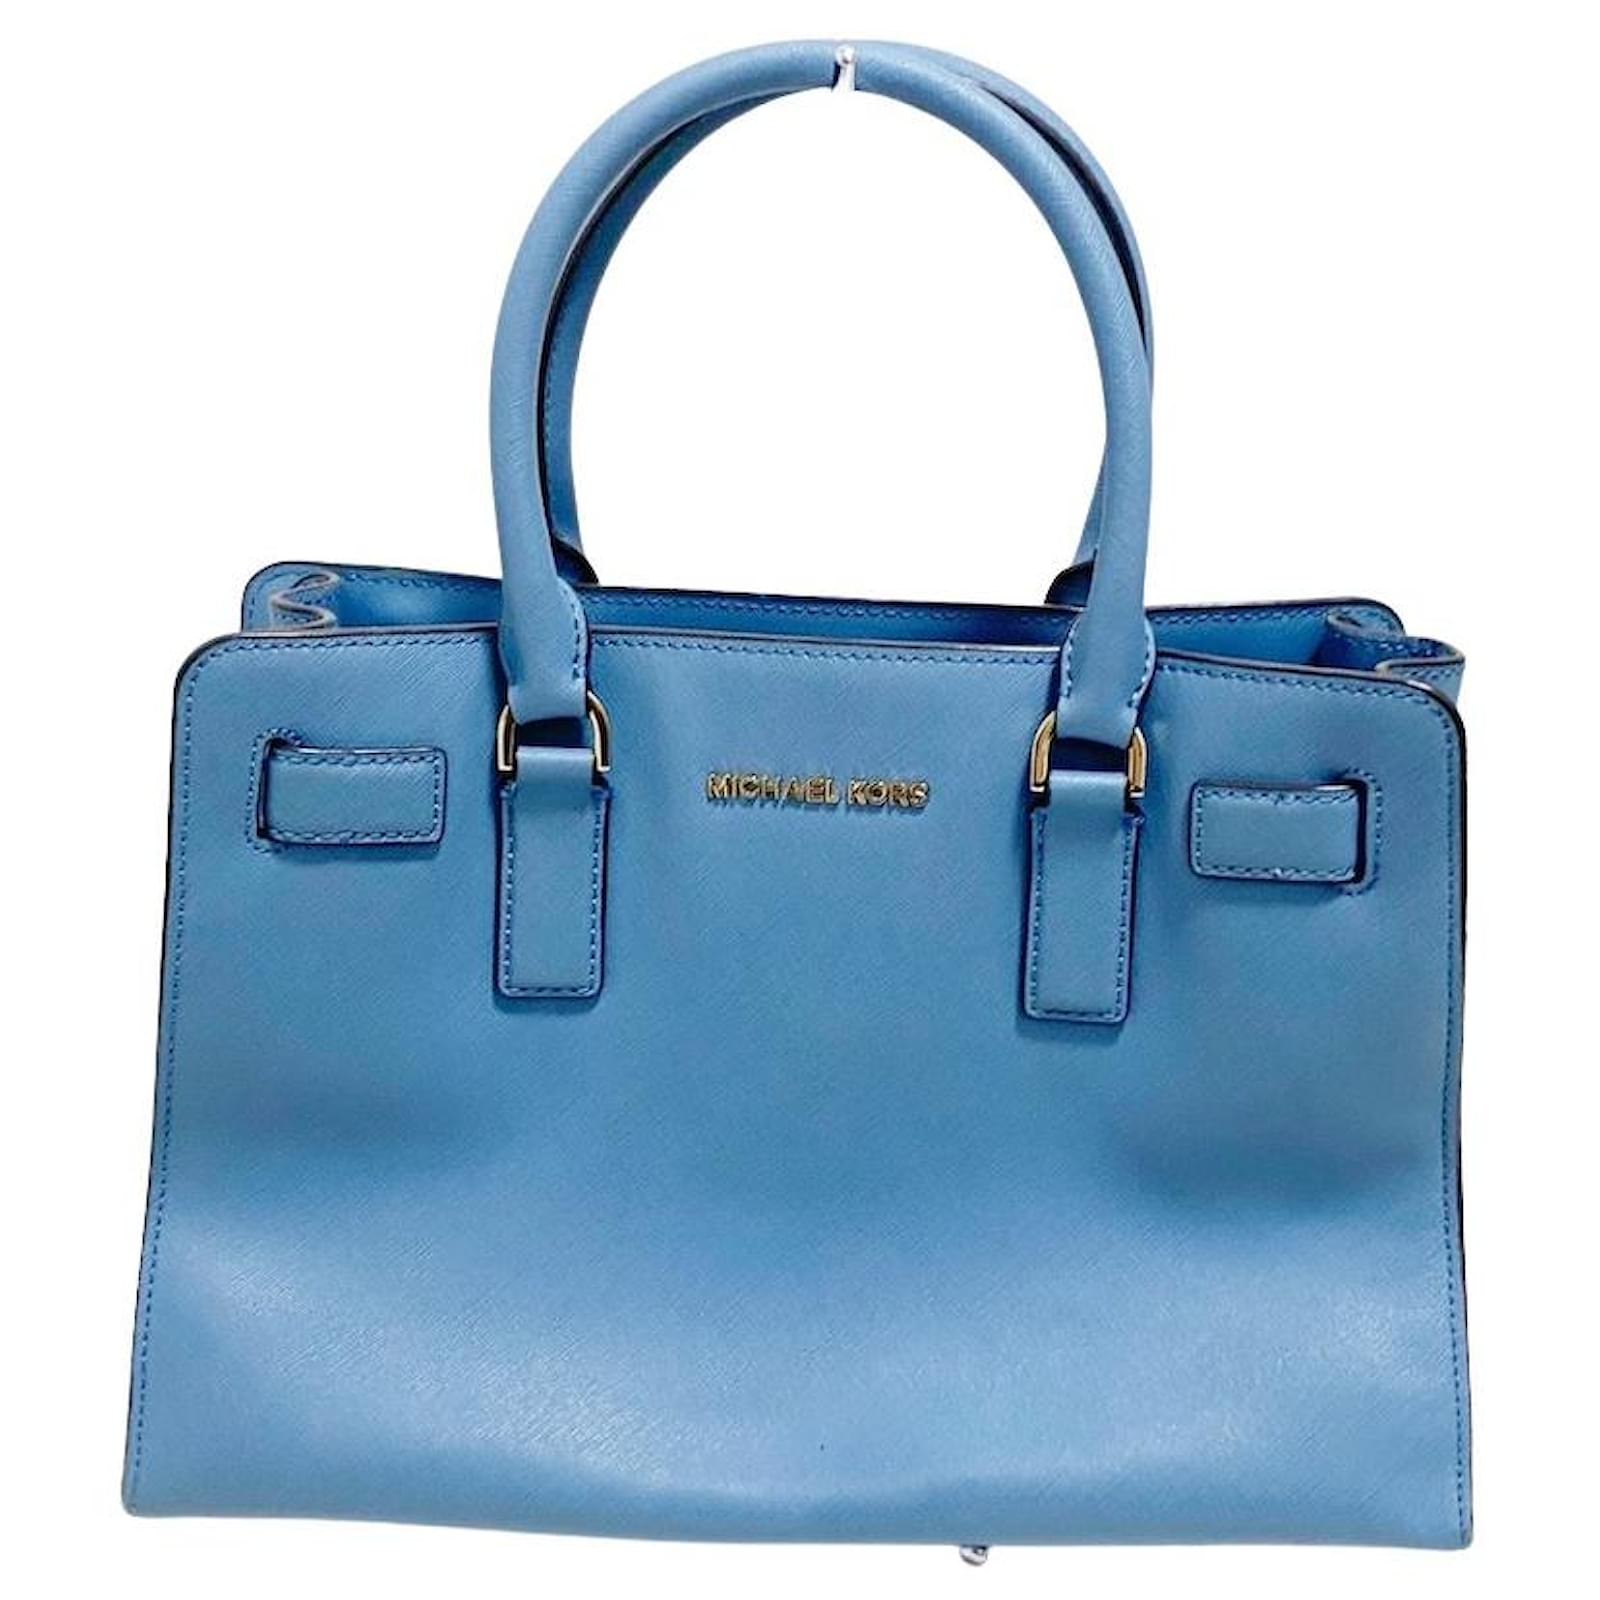 MICHAEL KORS GILLY LARGE DRAWSTRING TRAVEL TOTE pale ocean - Women's  handbags